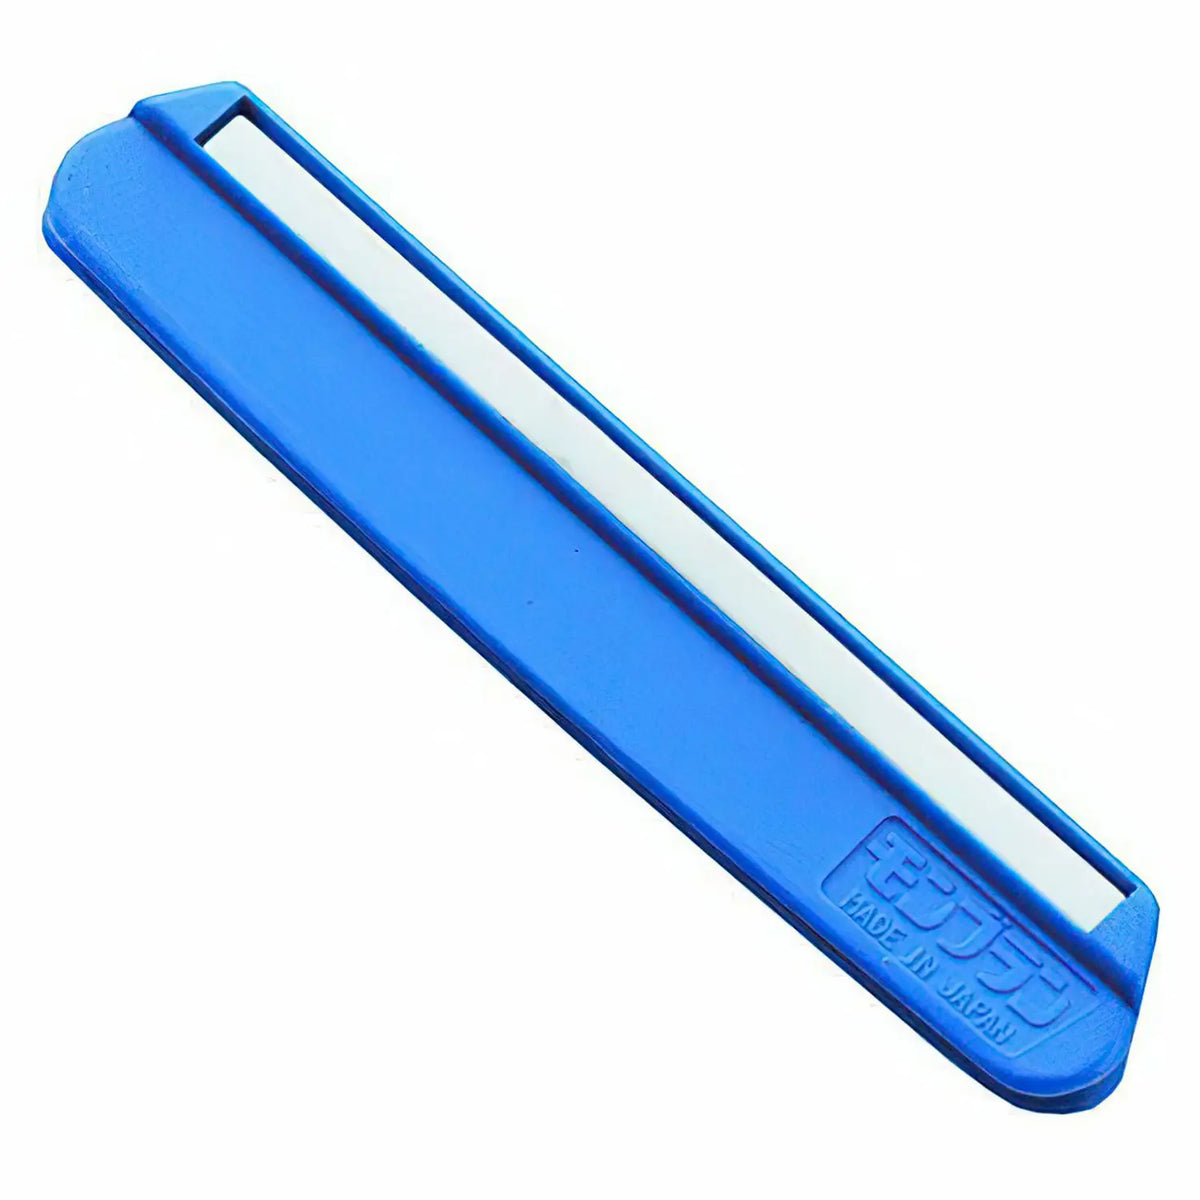 Professional Plastic Angle Guide Sharpening Tool Knife Sharpener Helper